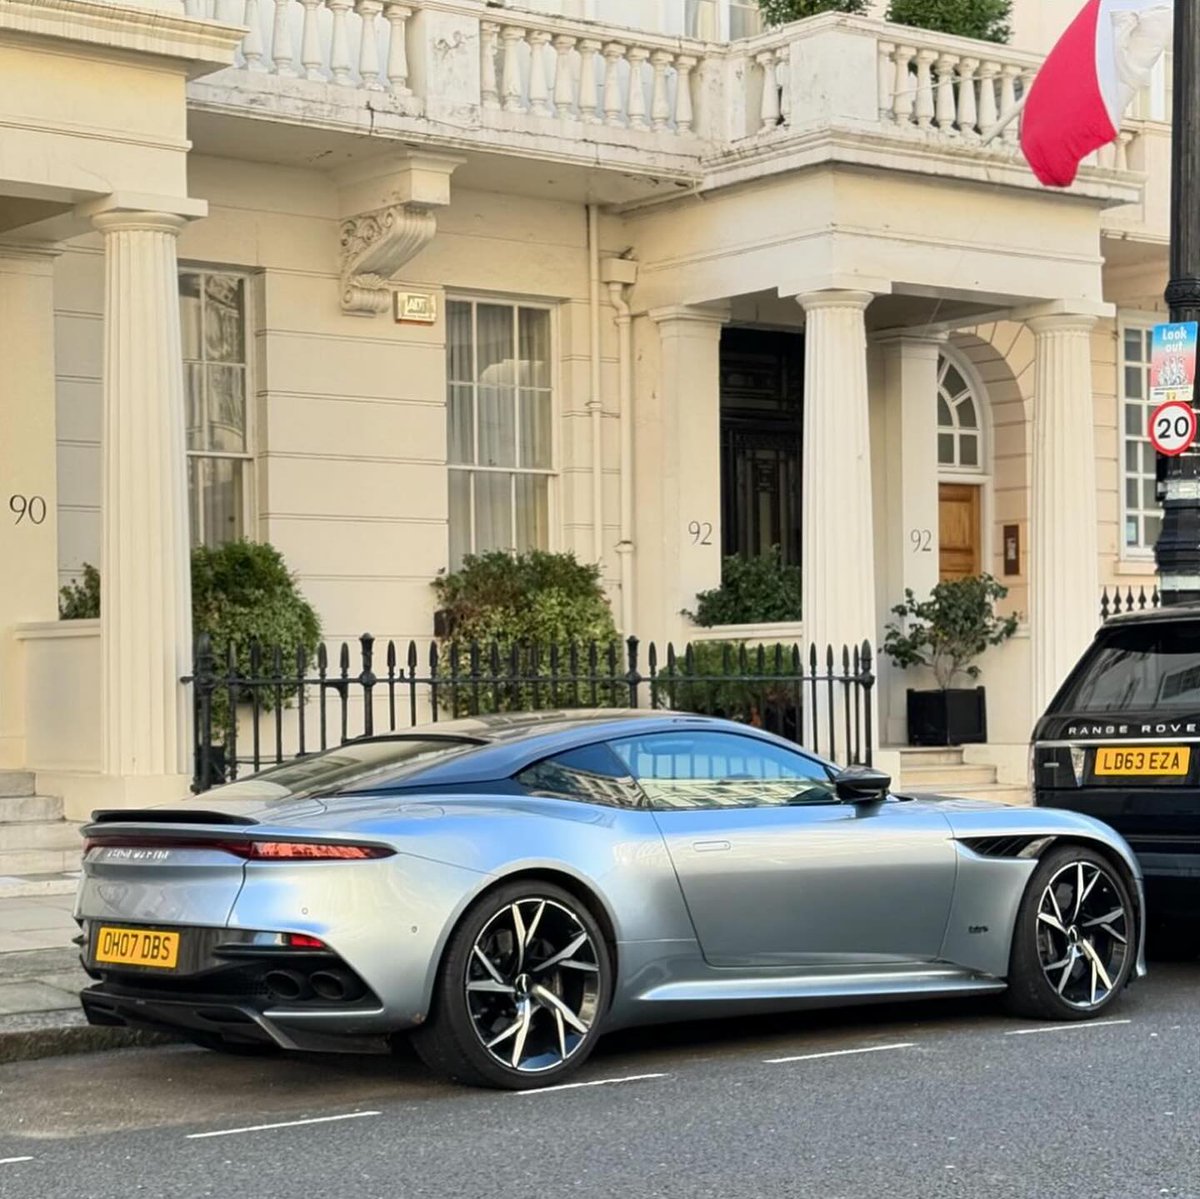 Aston Martin DBS Superleggera
📸 @carbrochure
#astonmartin #dbs #dbssuperleggera #astonmartindbssuperleggera